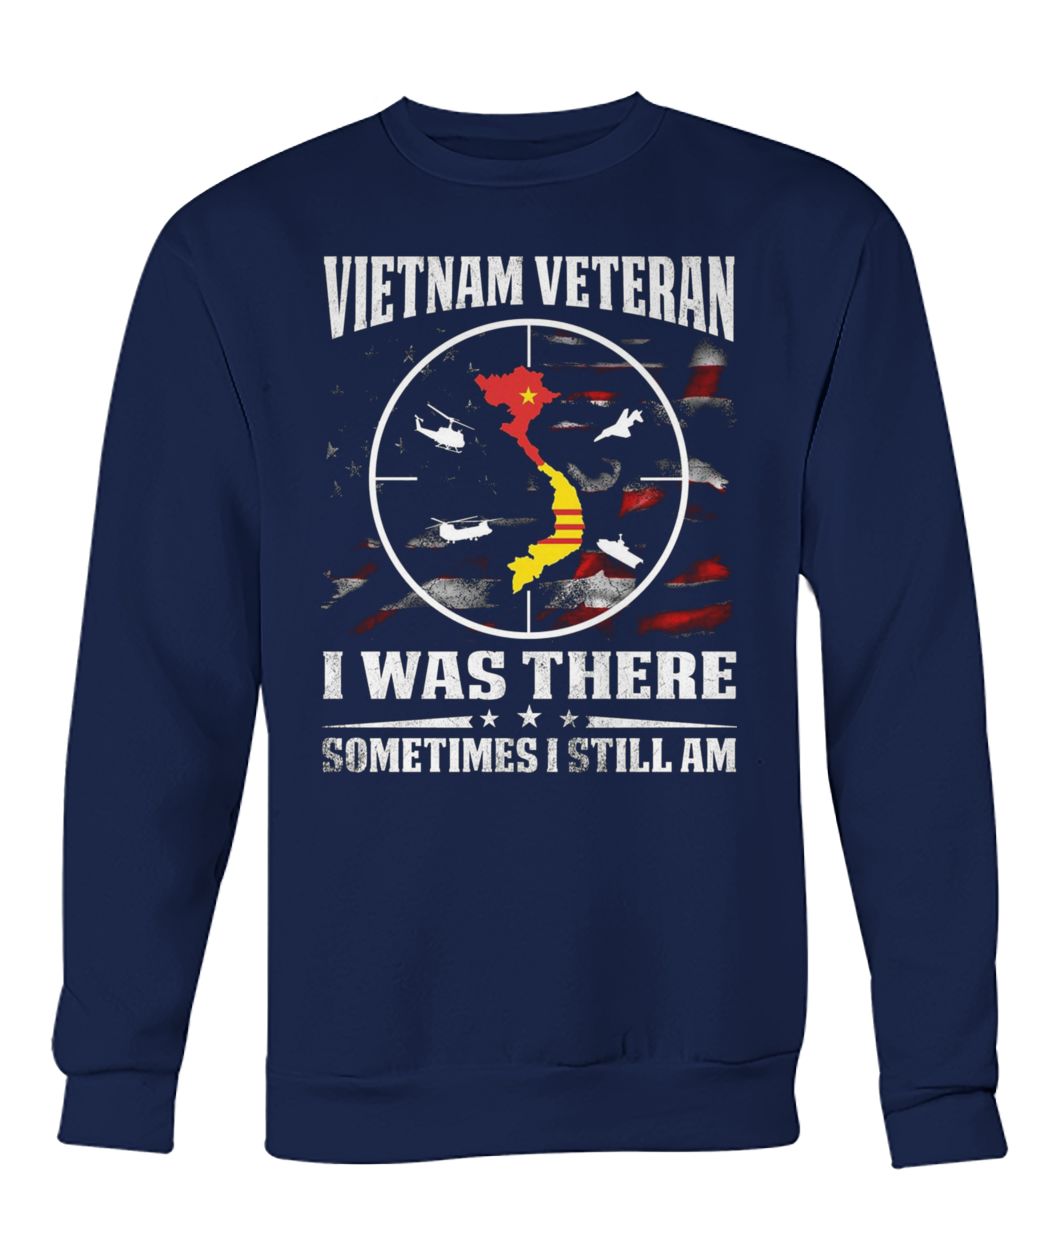 Vietnam veteran I was there sometimes I still am crew neck sweatshirt